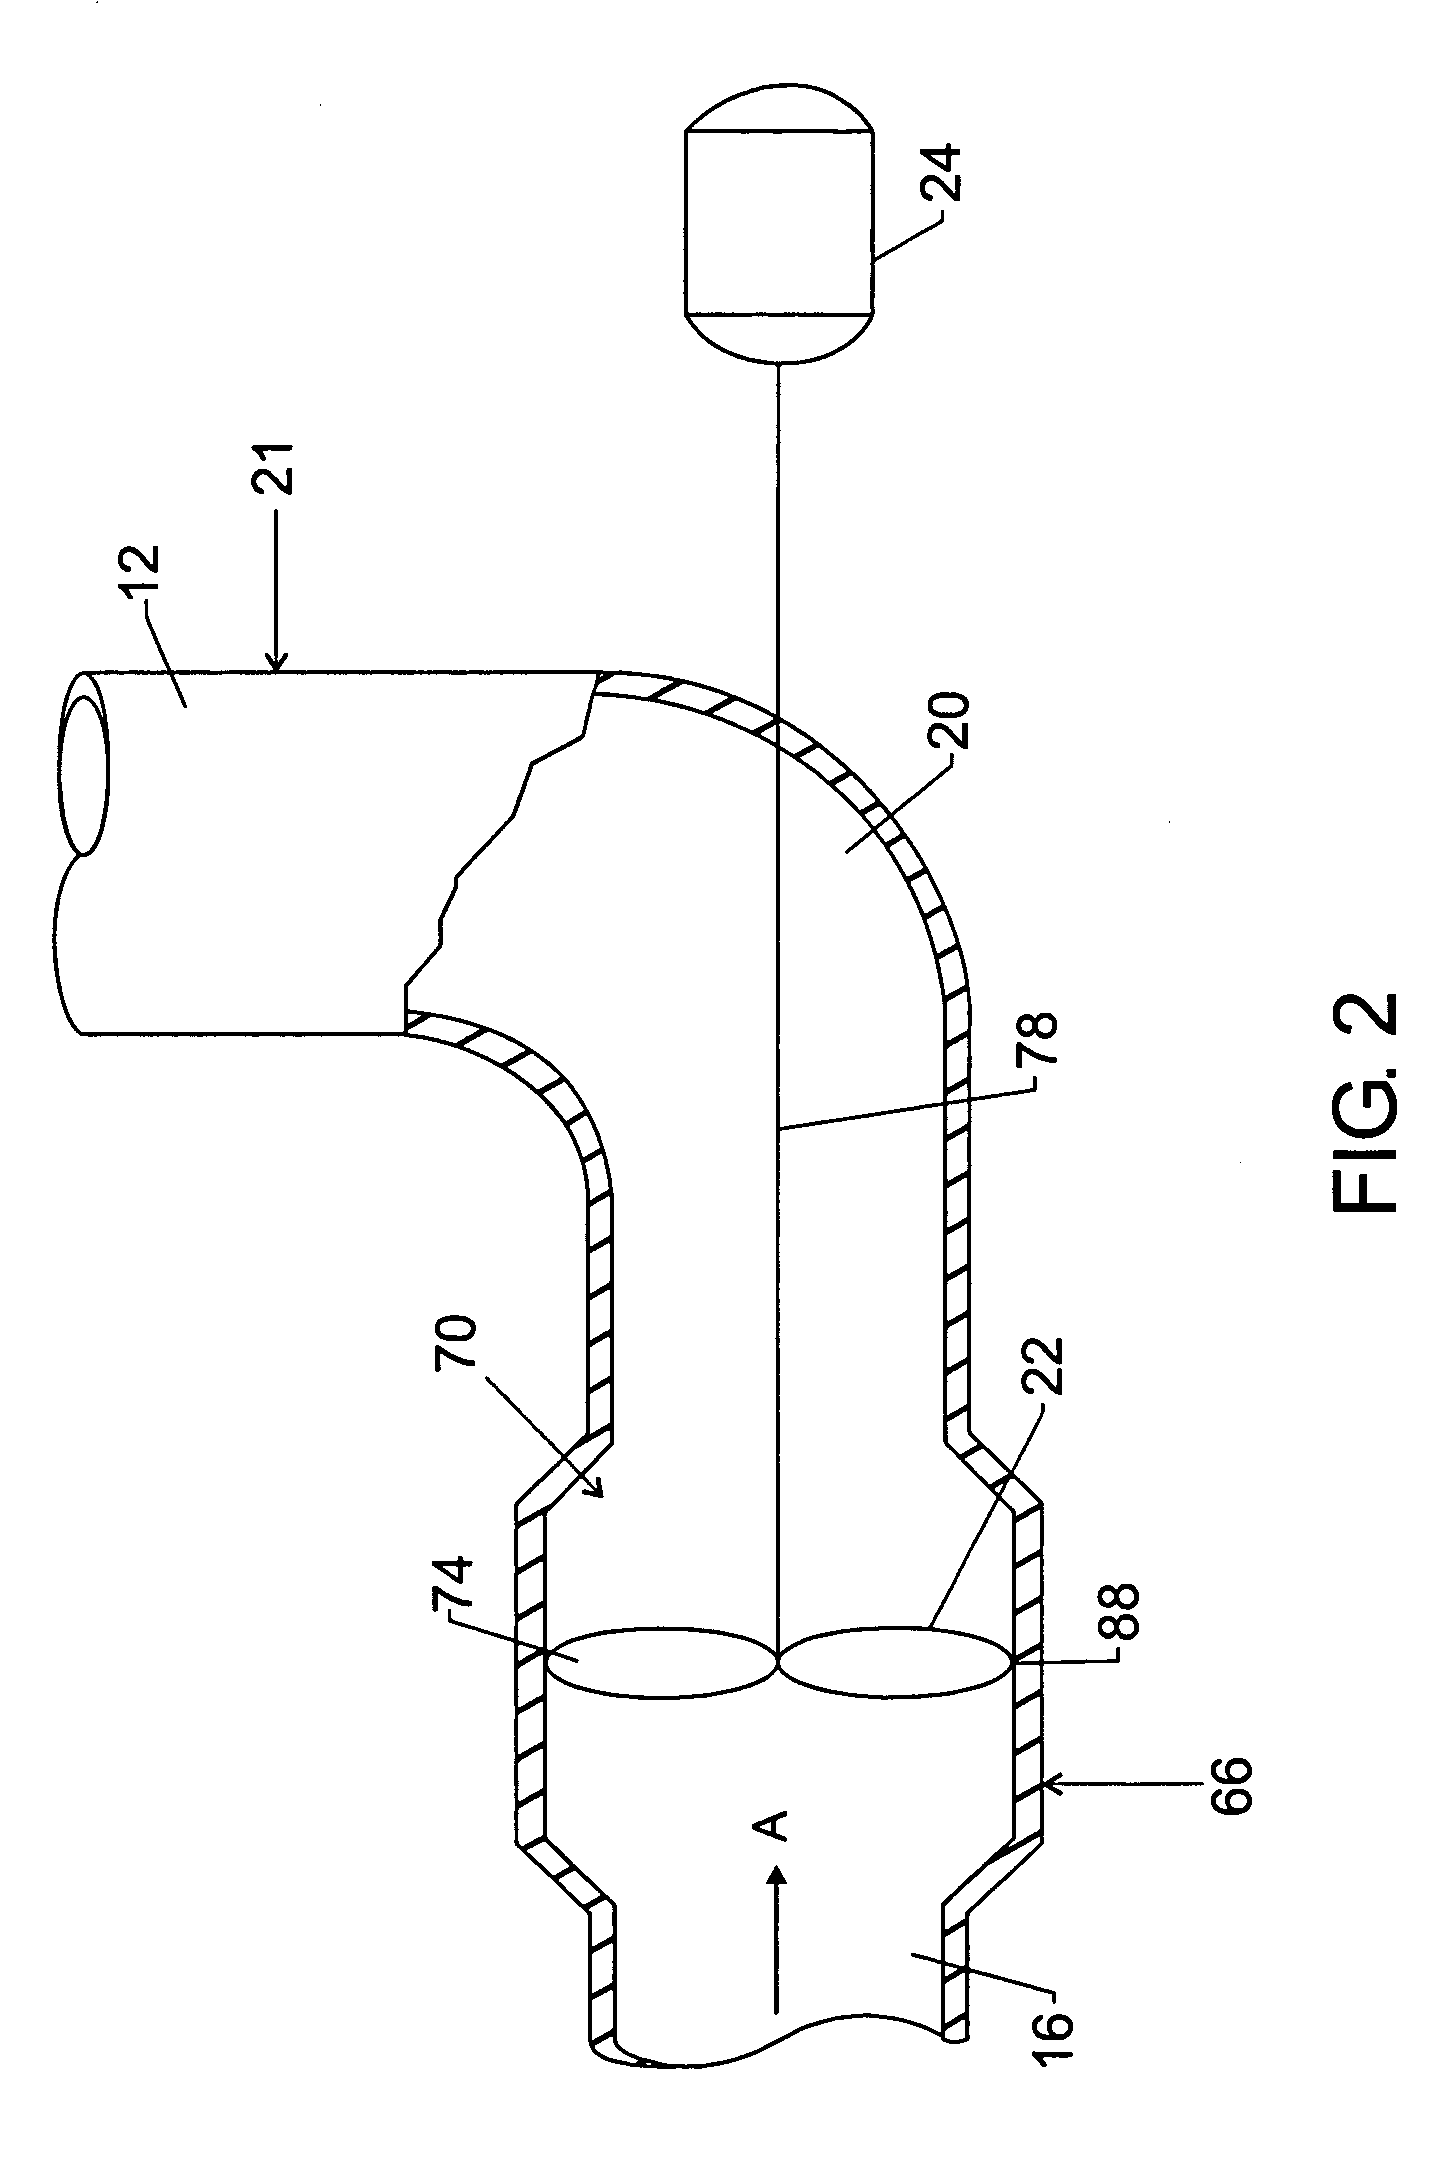 Pumping apparatus for slurry polymerization in loop reactors